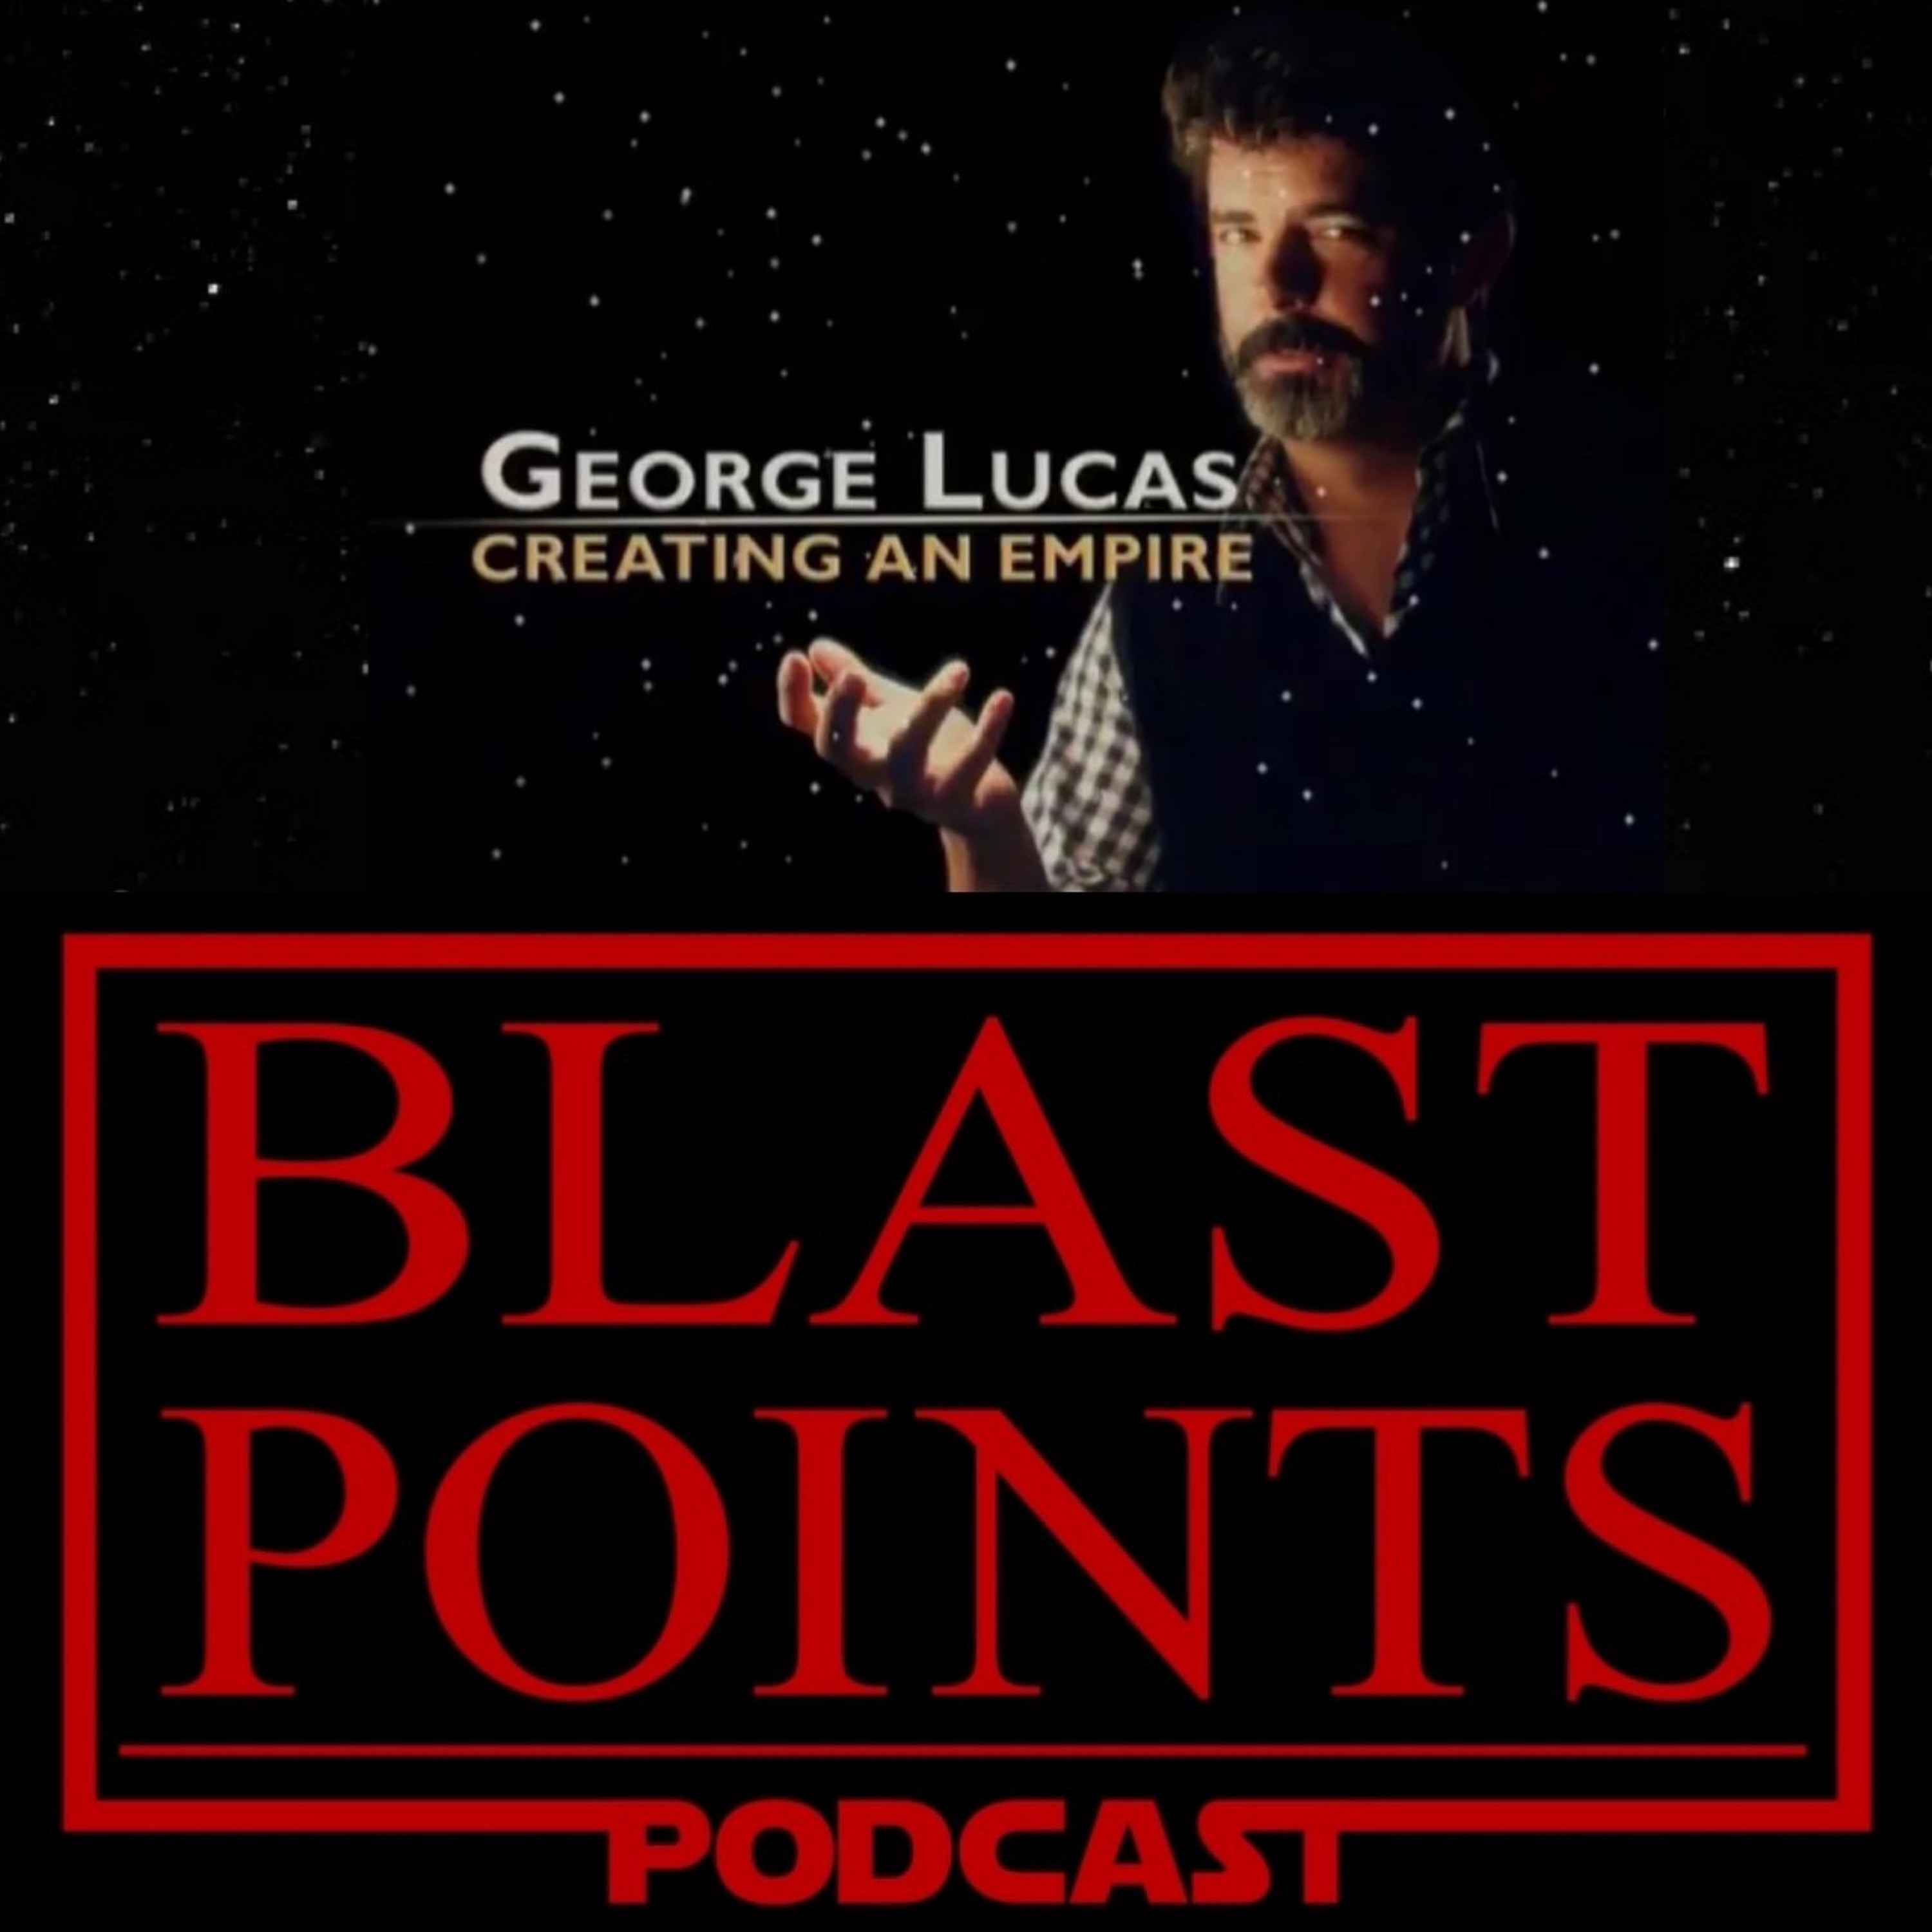 Episode 341 - The George Lucas A&E Biography Fan Club